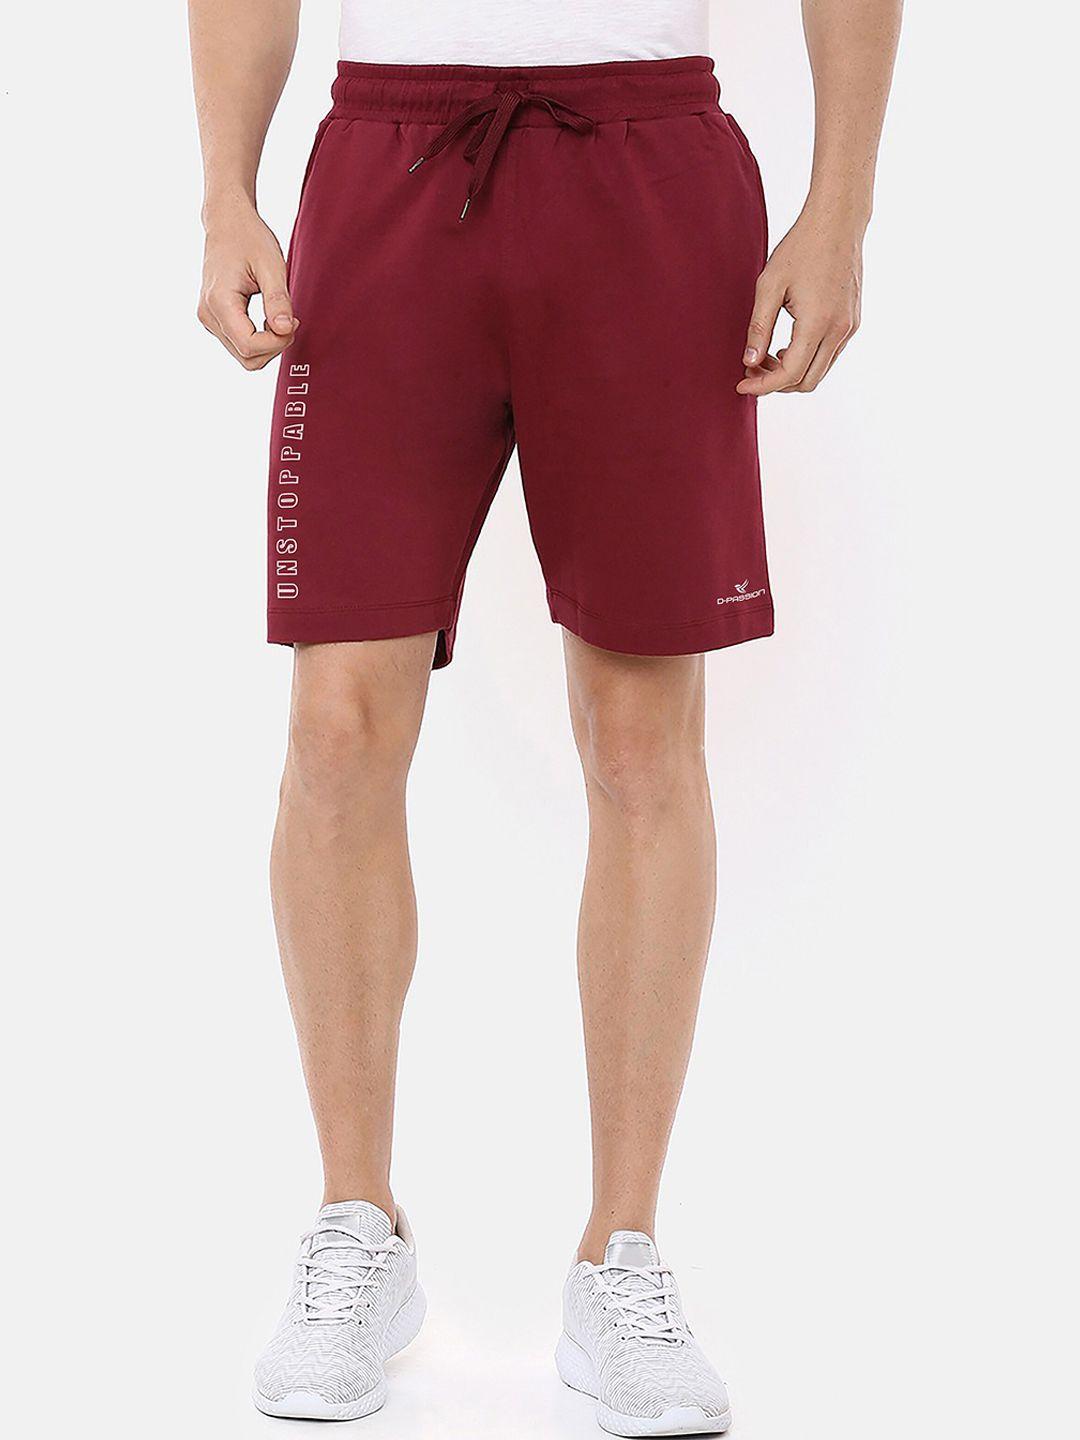 dpassion men maroon printed running sports shorts